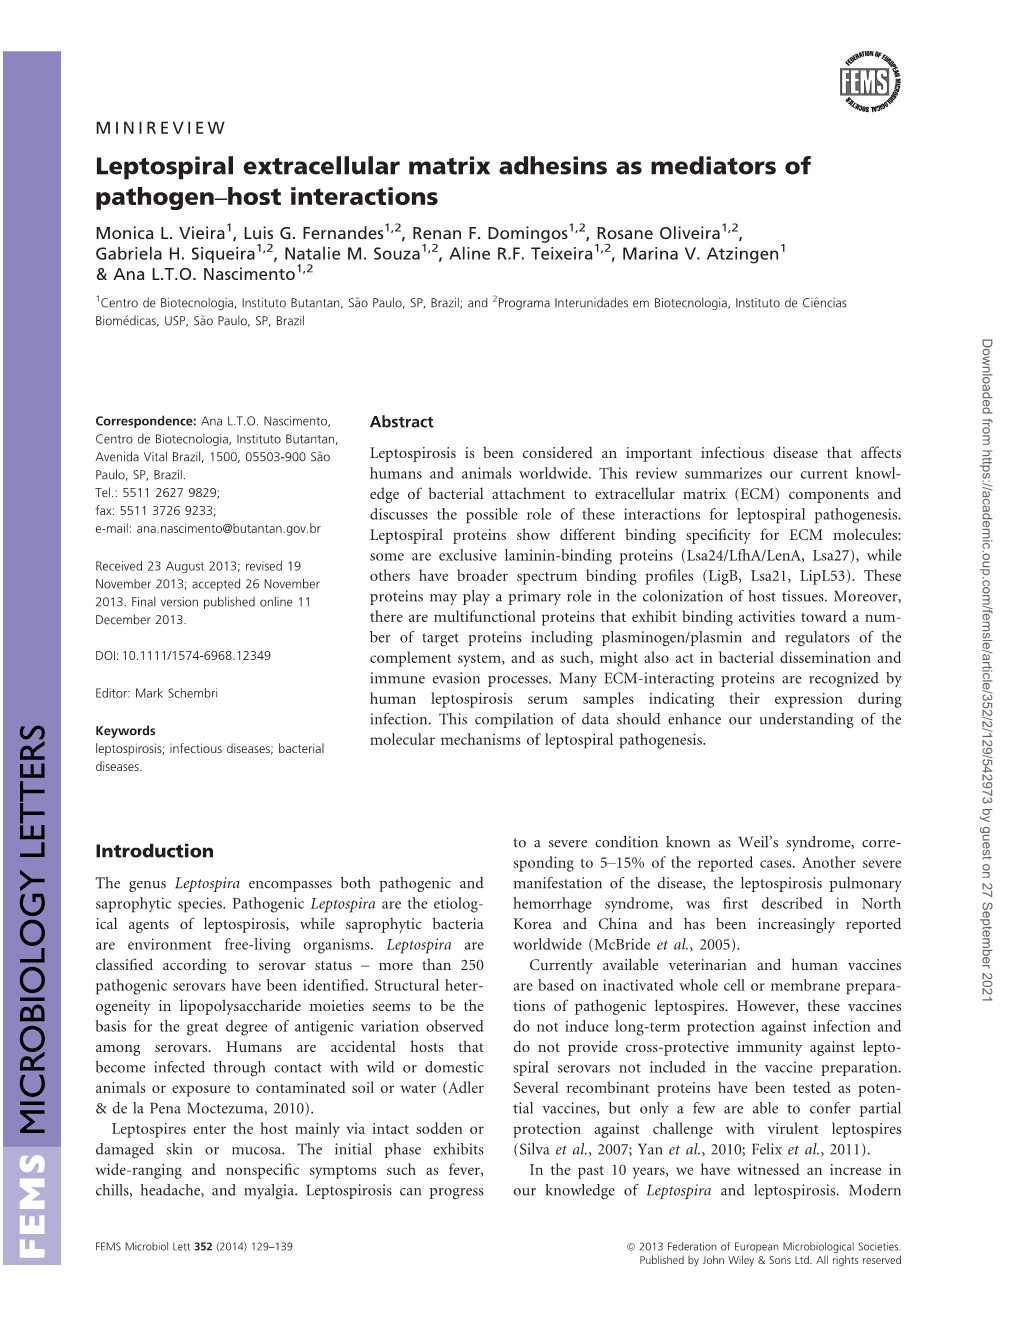 Leptospiral Extracellular Matrix Adhesins As Mediators of Pathogenhost Interactions